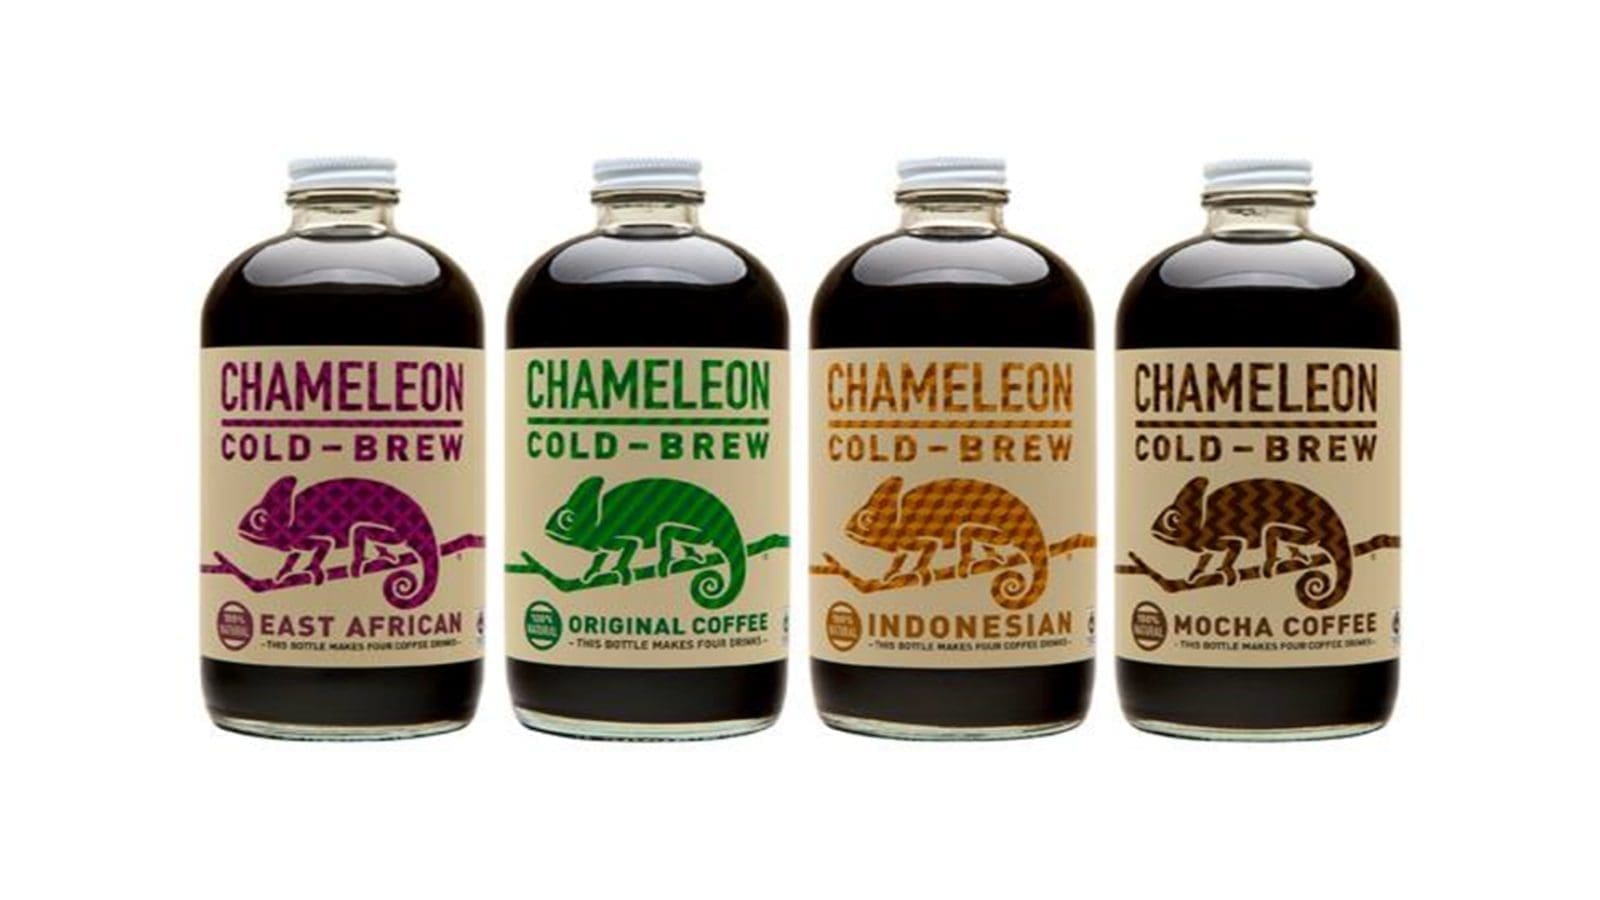 Nestle offloads Chameleon Organic Coffee brand to sharpen  focus on leading brands